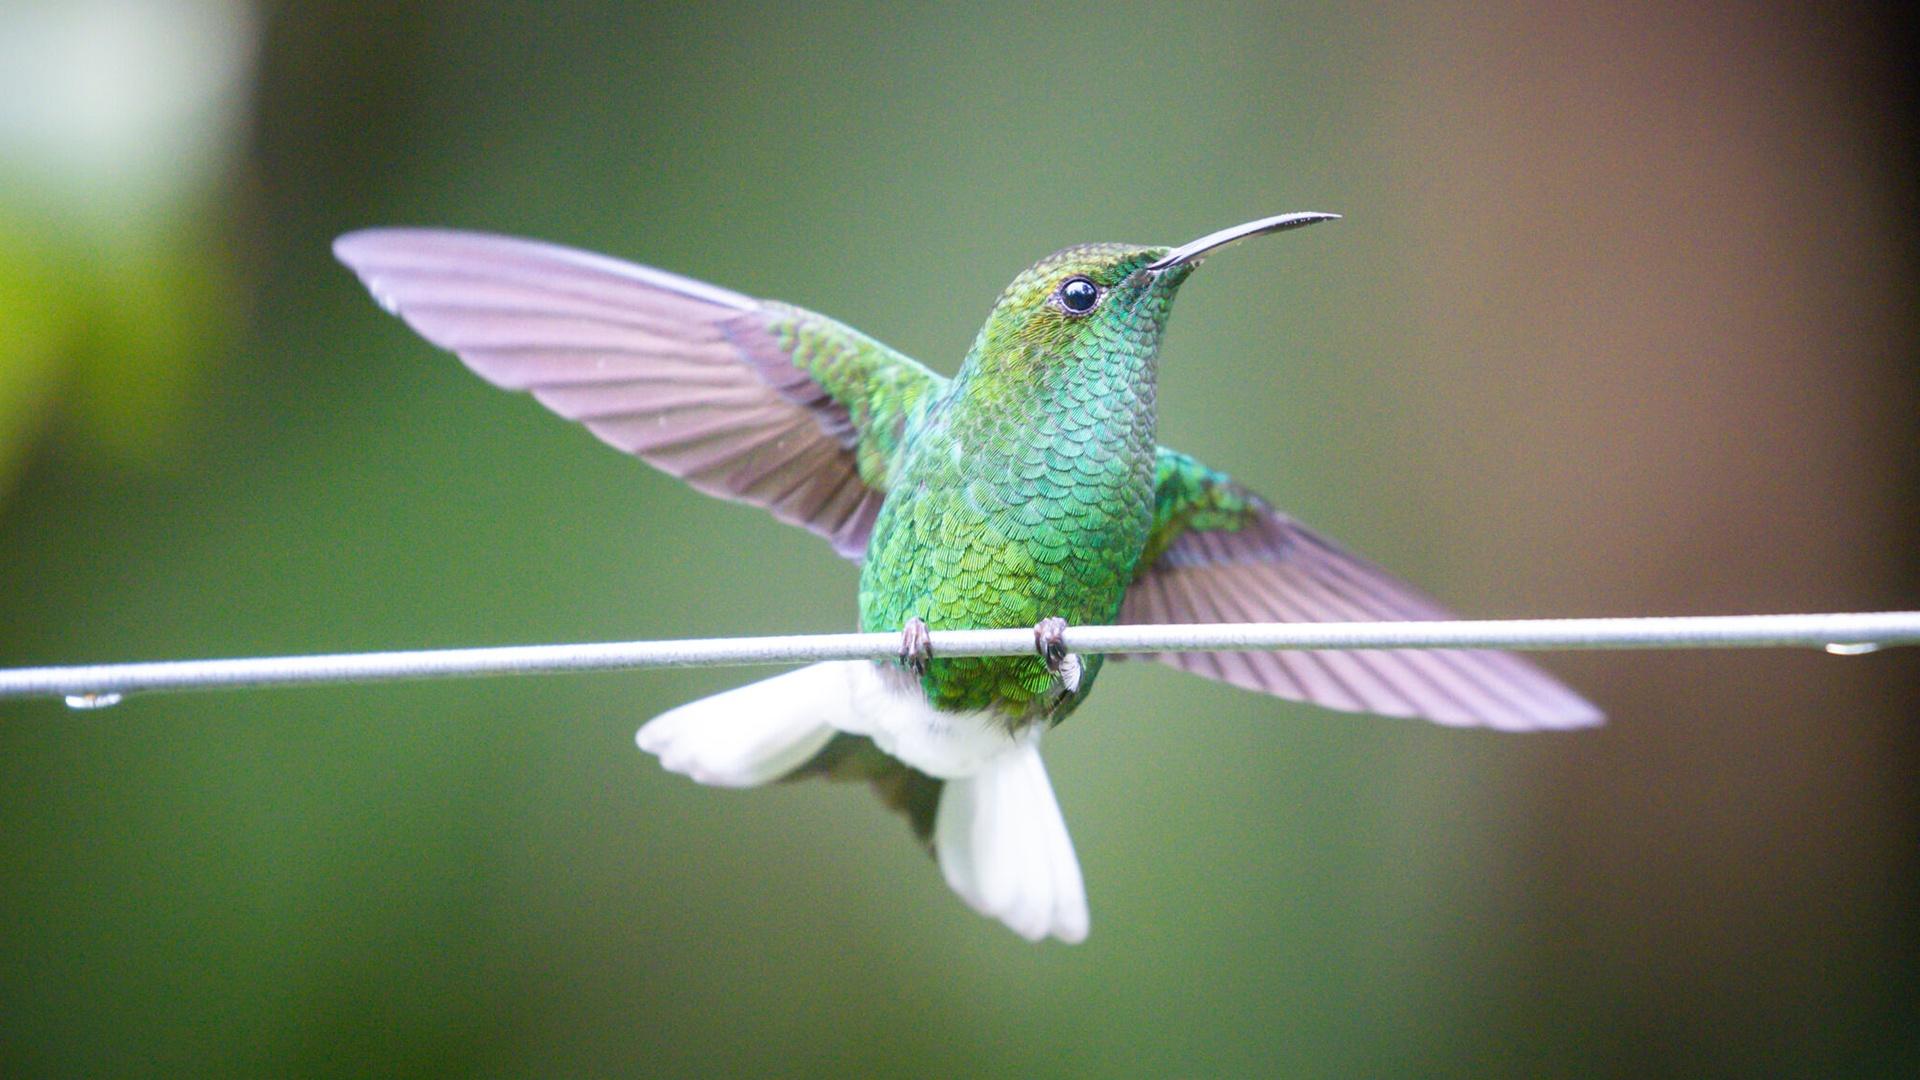 A colorful hummingbird